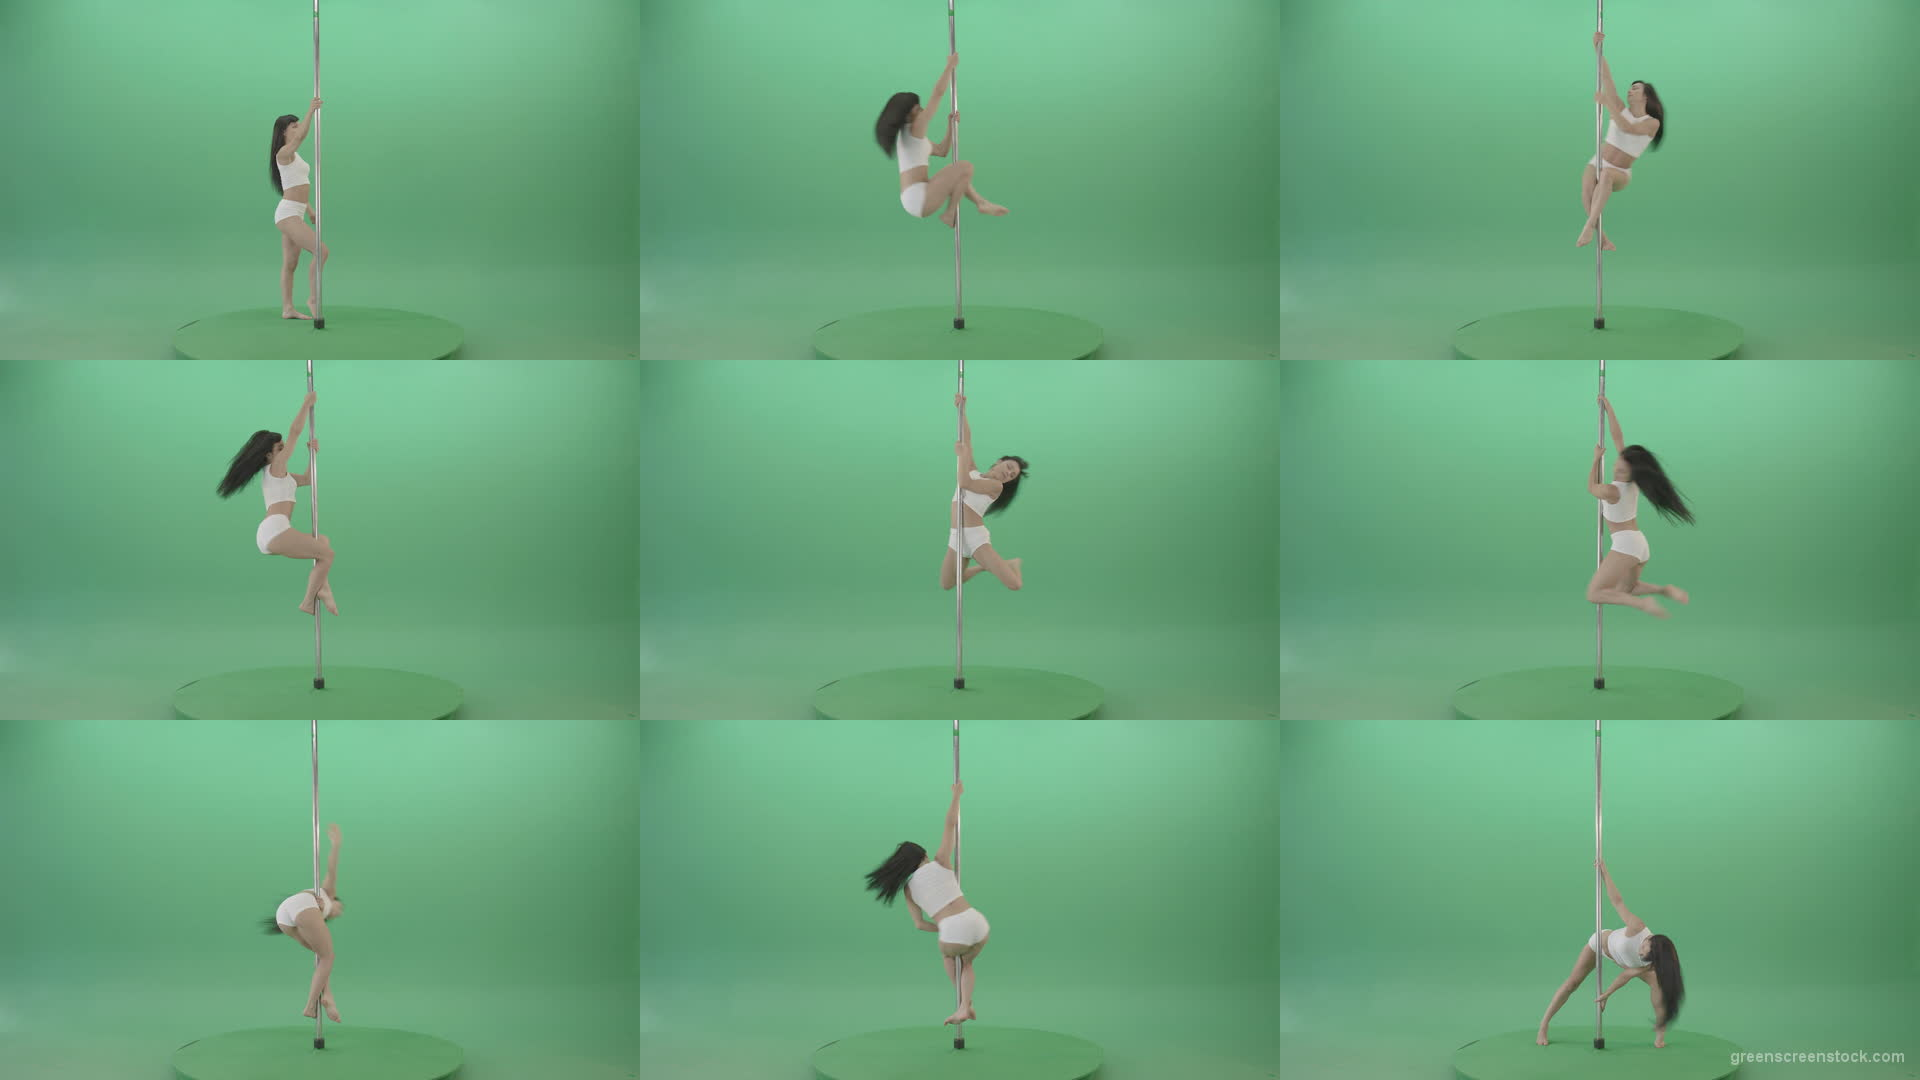 Pole-dance-trainer-girl-has-a-sport-flight-on-green-screen-4K-Video-Footage-1920 Green Screen Stock